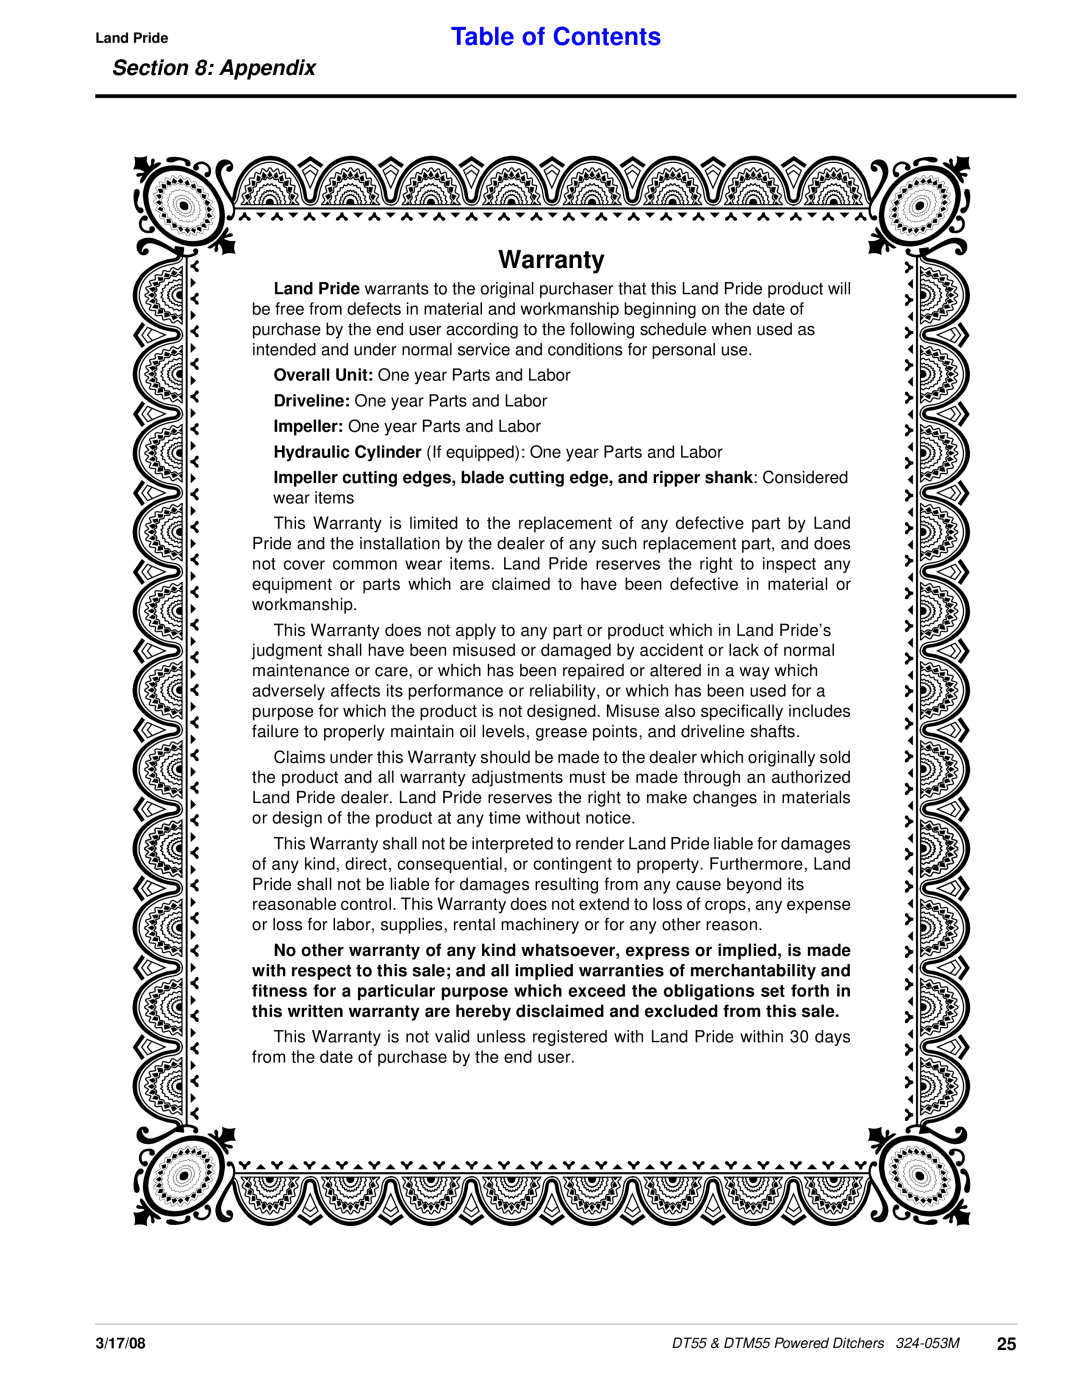 Land Pride DTM55, DT55, Powered Ditchers manual Warranty, Table of Contents, Appendix 